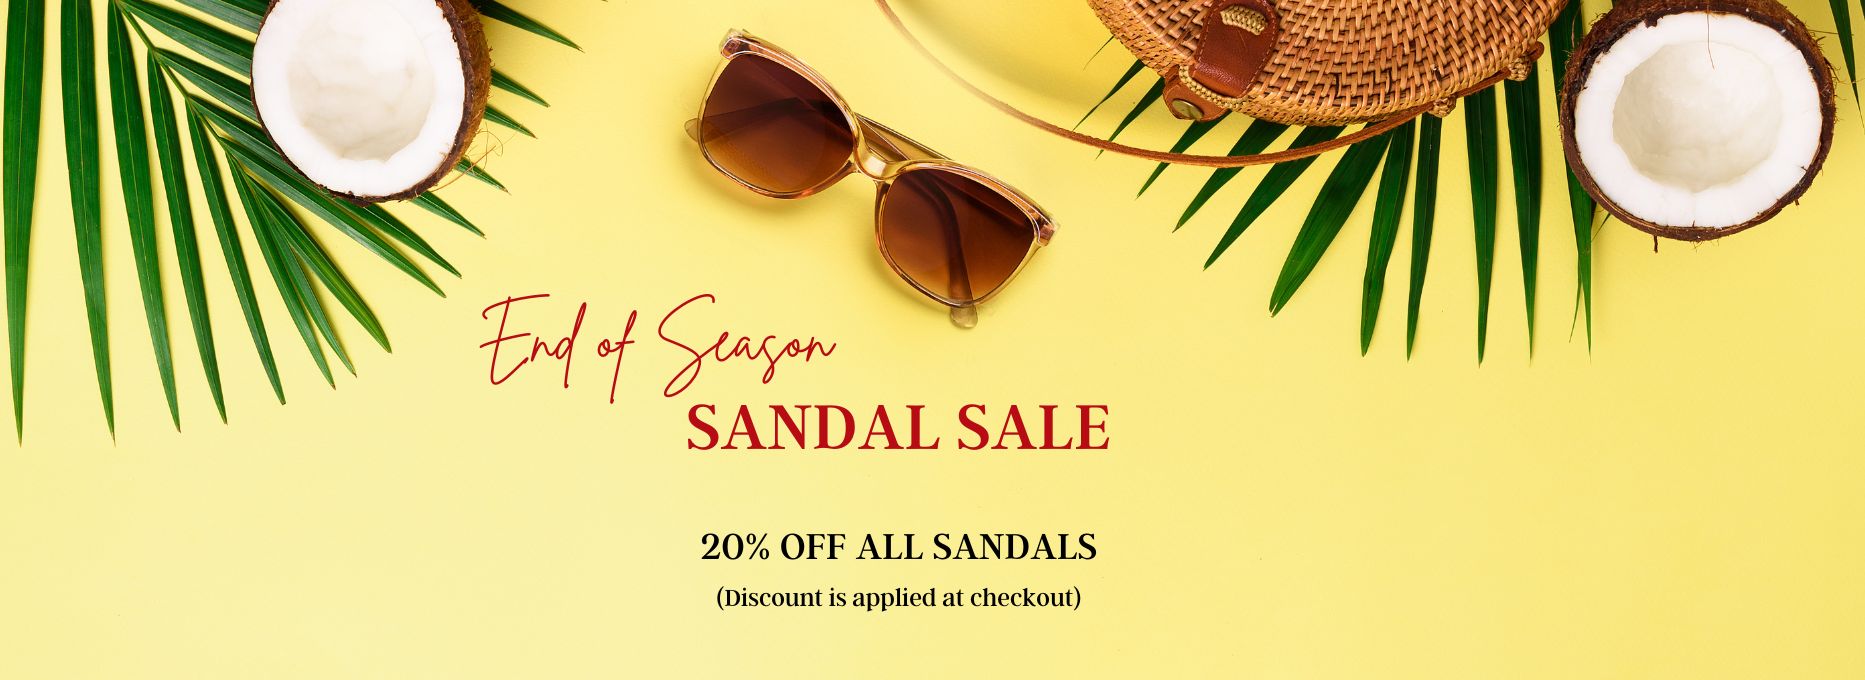 End of the Season 20% off Sandal Sale